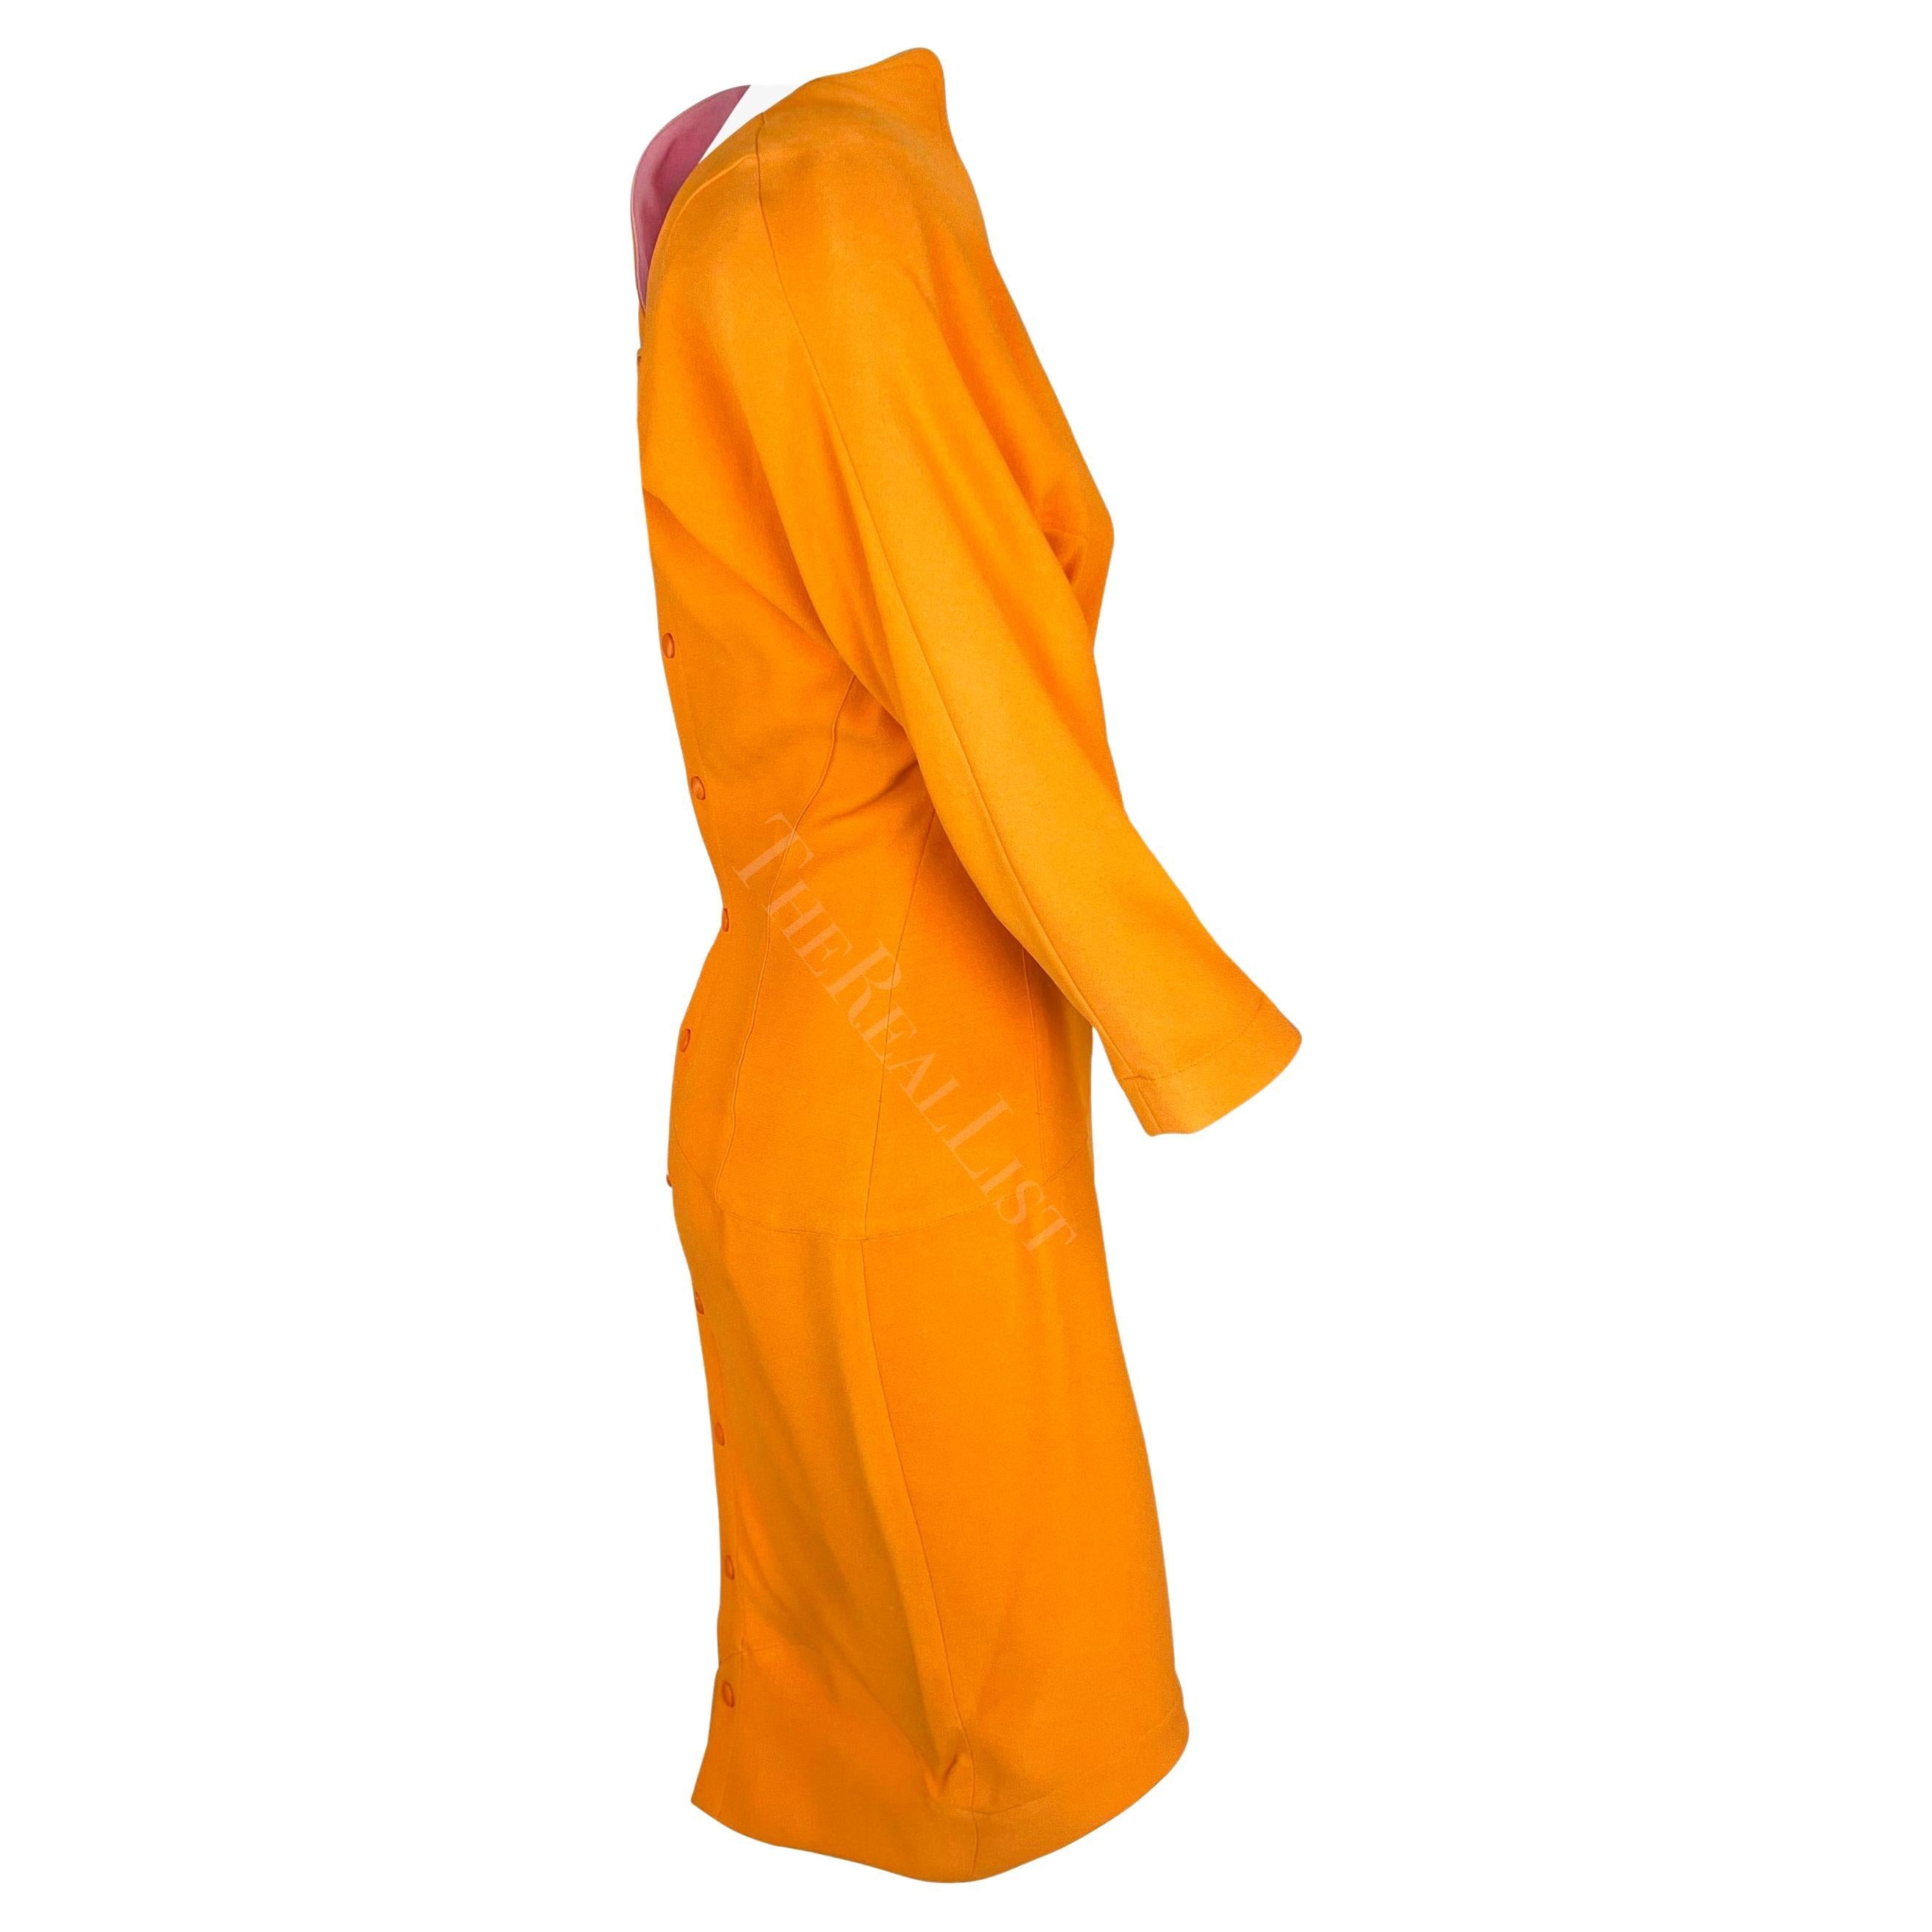 S/S 1988 Thierry Mugler Runway Ad Orange One Sleeve Sculptural Sahara Dress For Sale 4